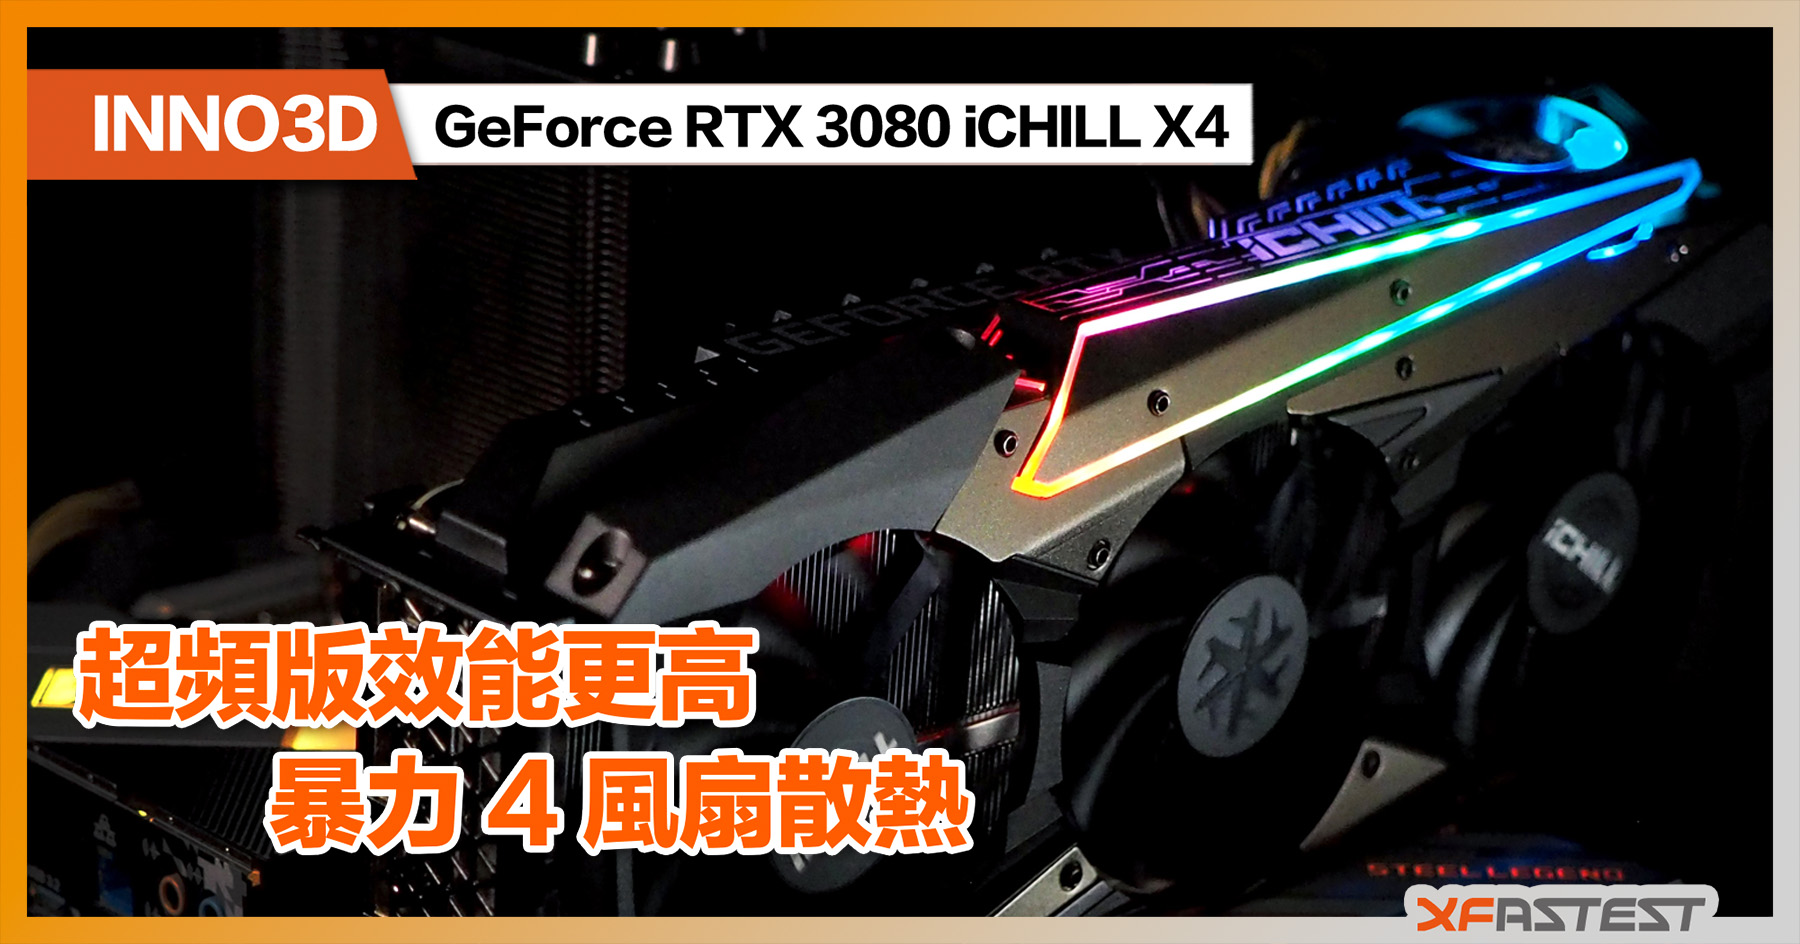 XF 開箱] 暴力4 風扇加強散熱超頻版效能更高INNO3D GeForce RTX 3080